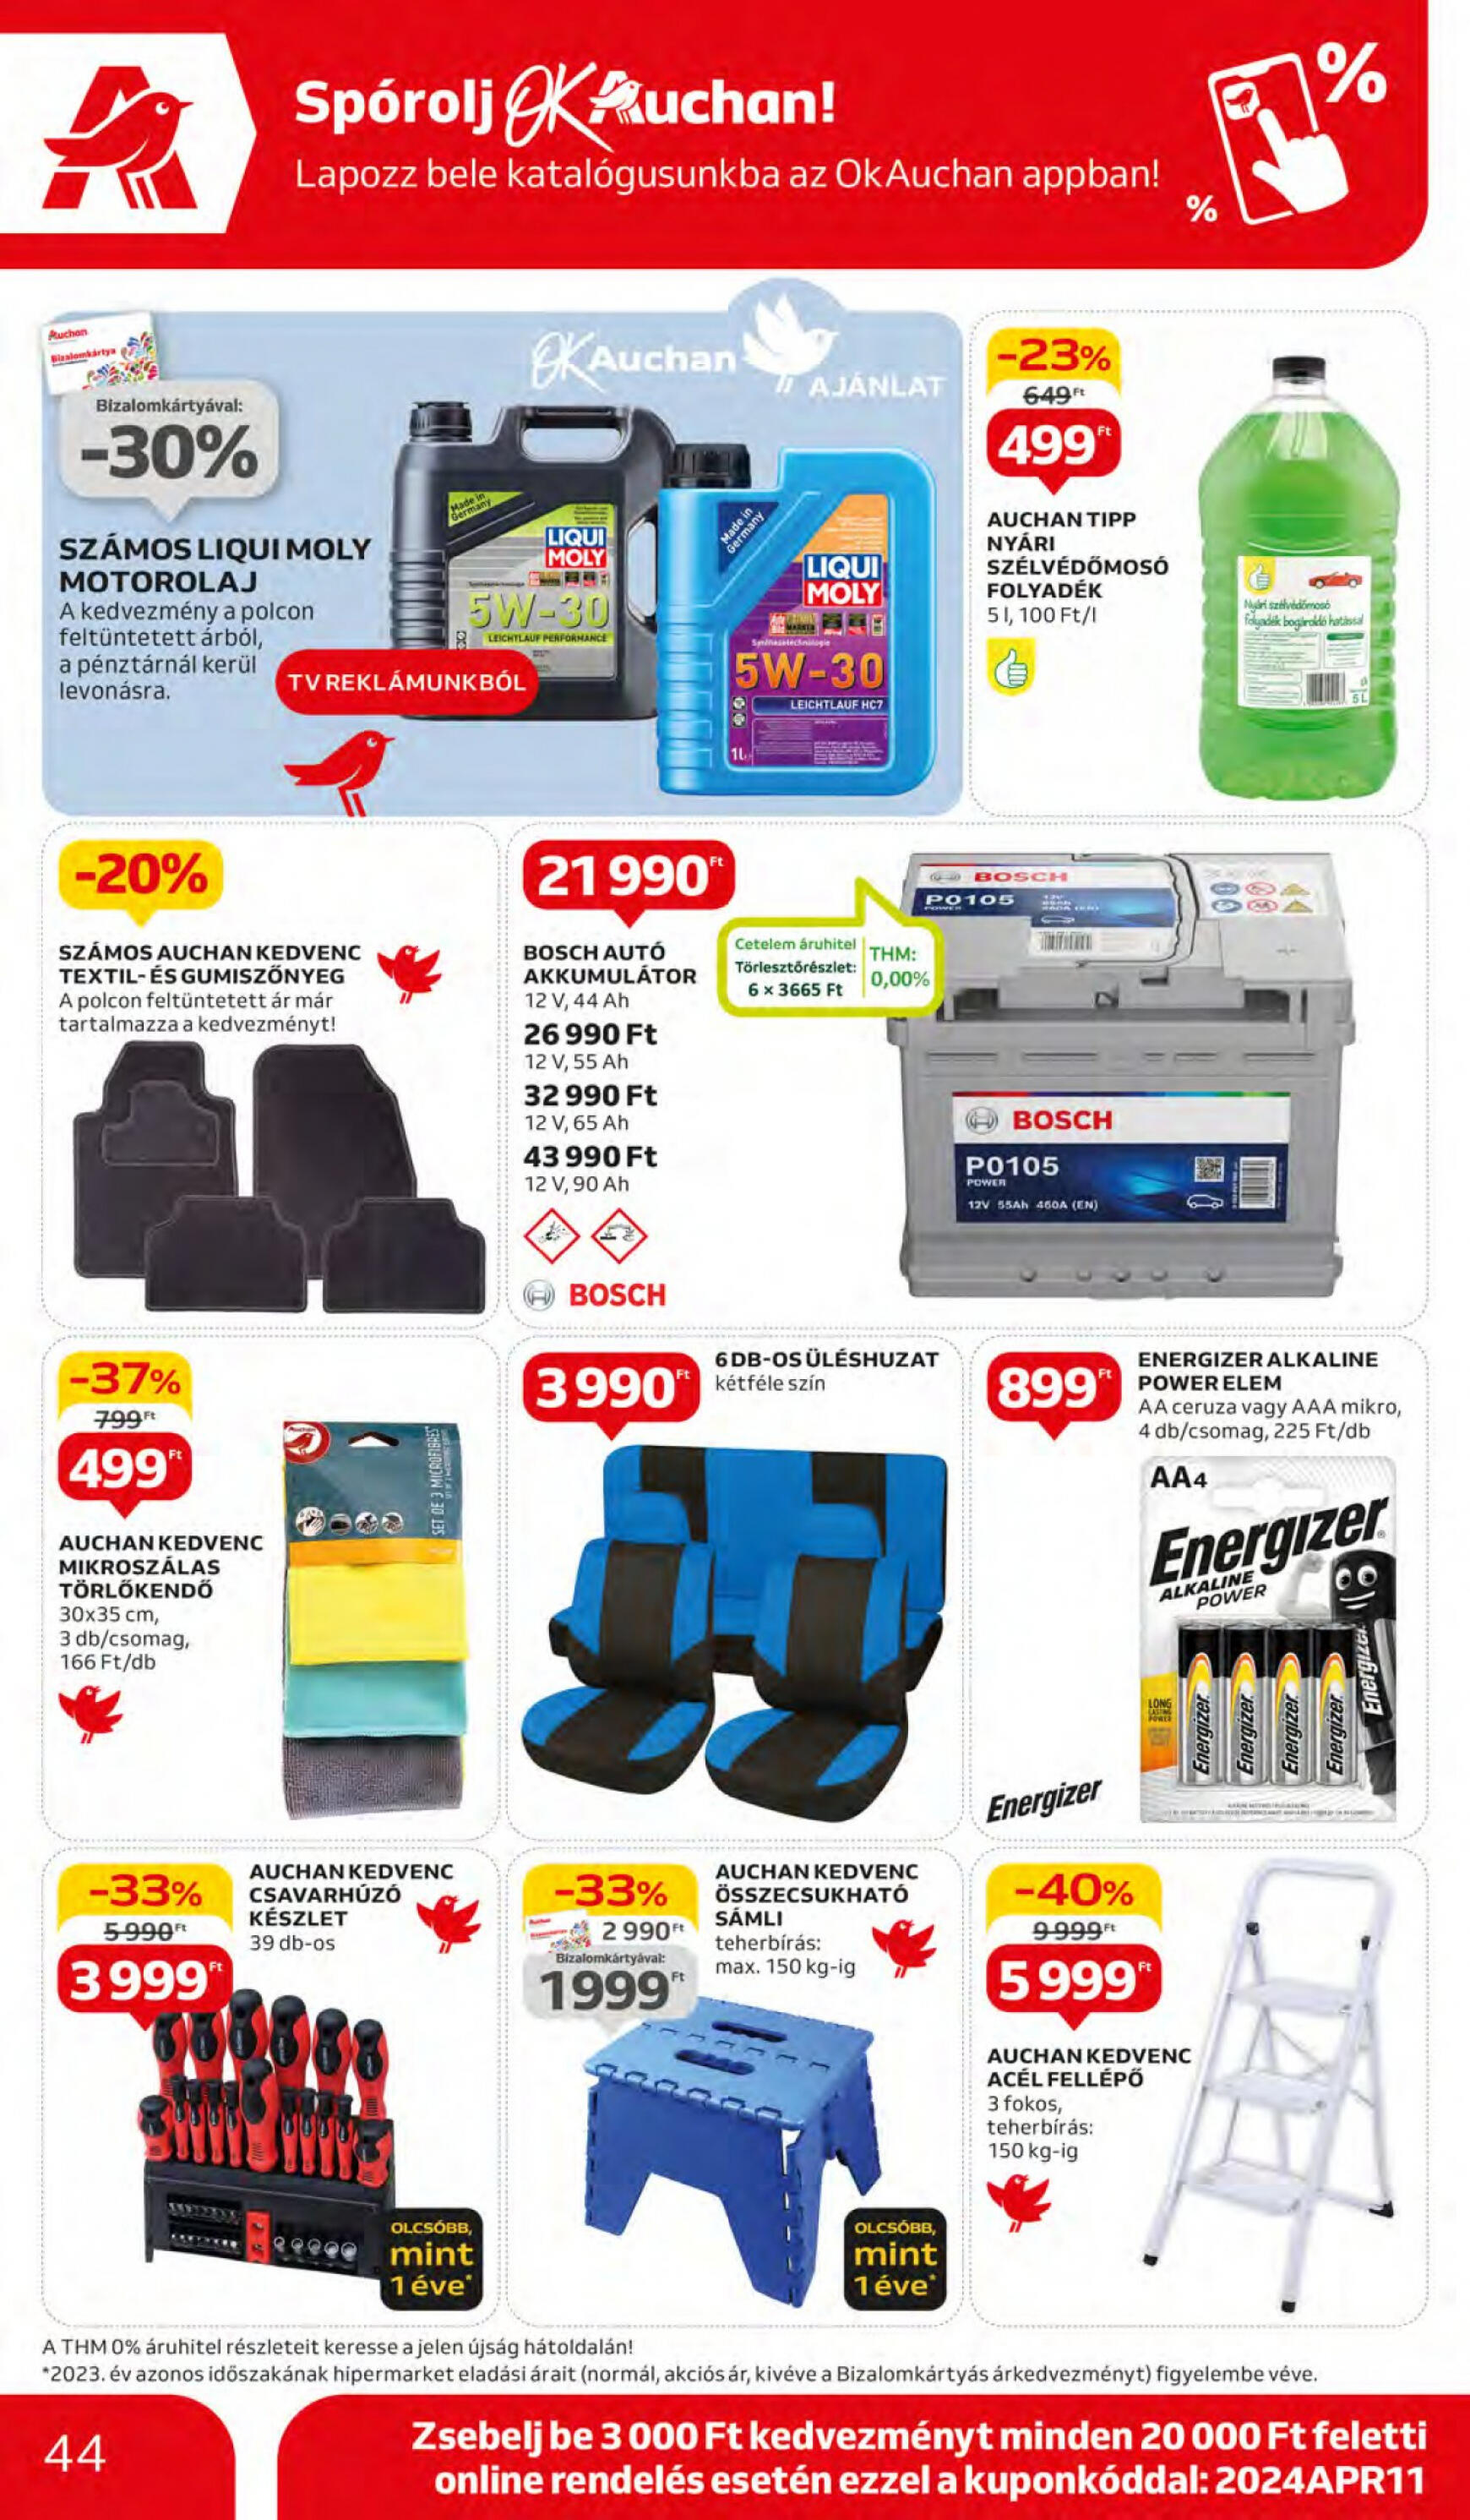 auchan - Aktuális újság Auchan 04.11. - 04.17. - page: 44